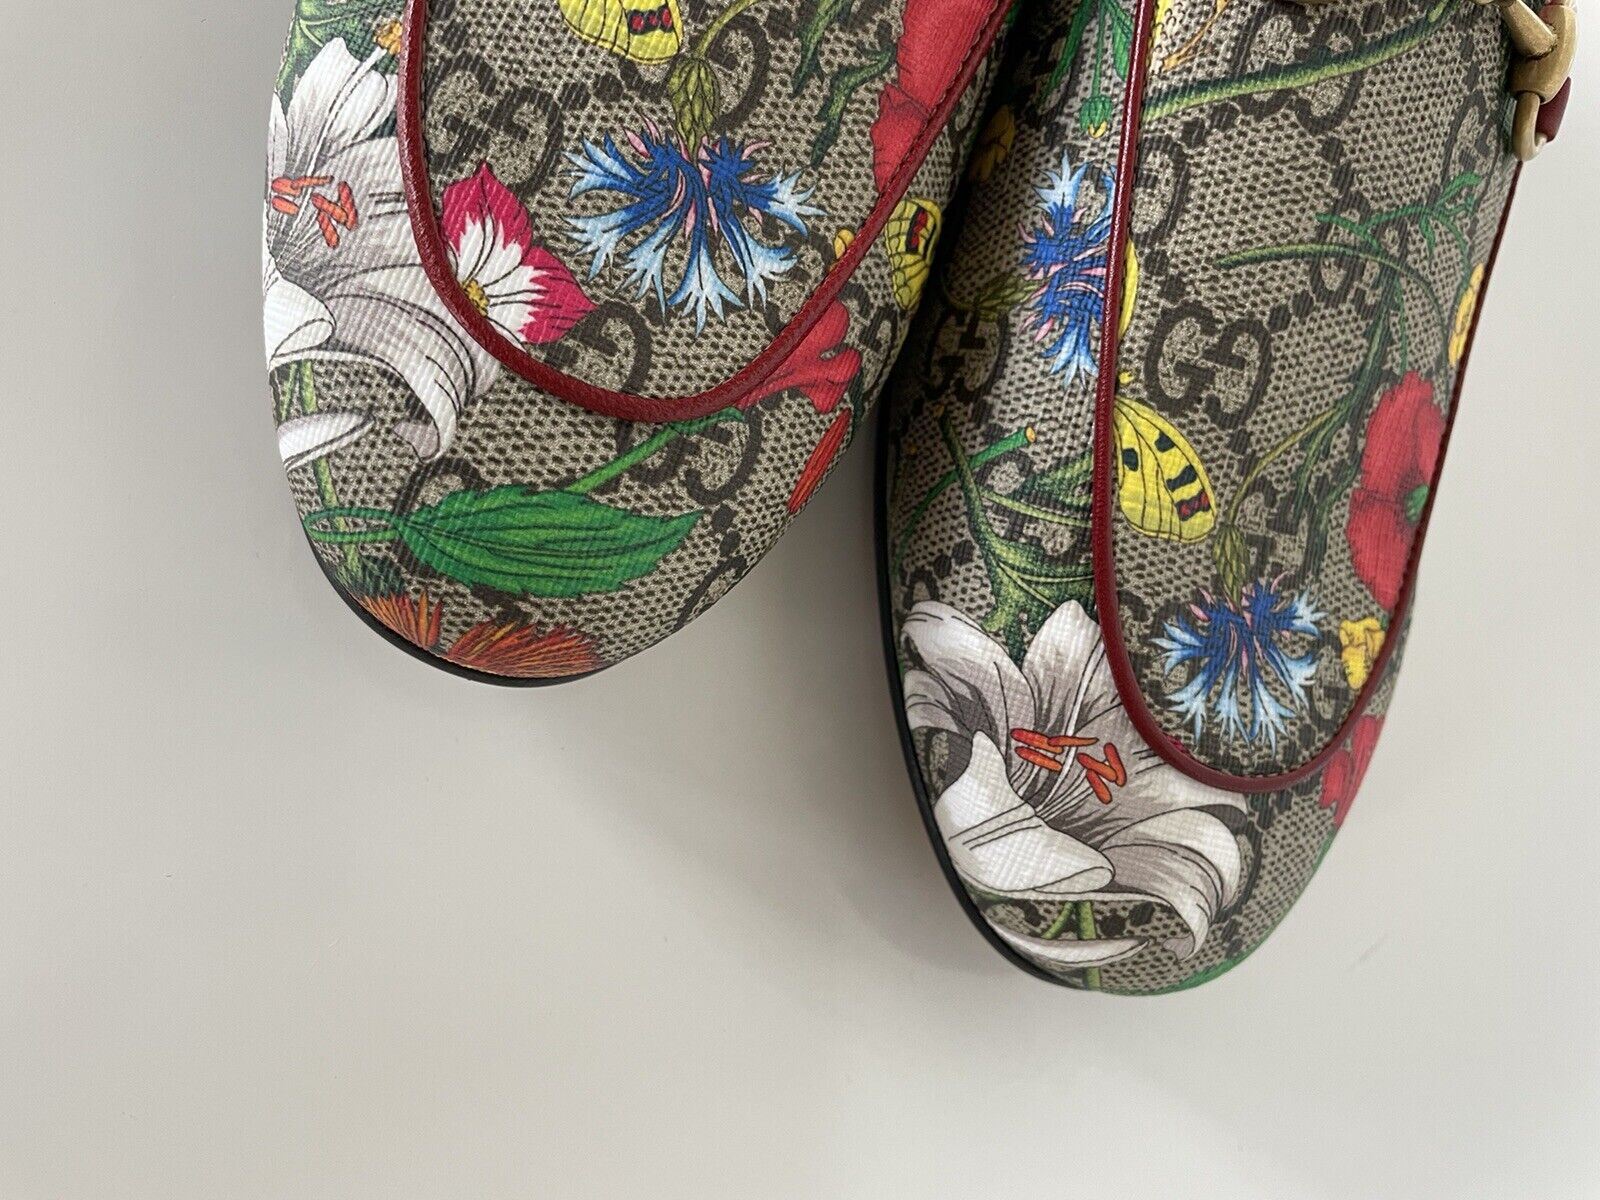 NIB Gucci Women's Horsebit Slip On GG Supreme Floral Sandals 6 US (36 Eu) 432772